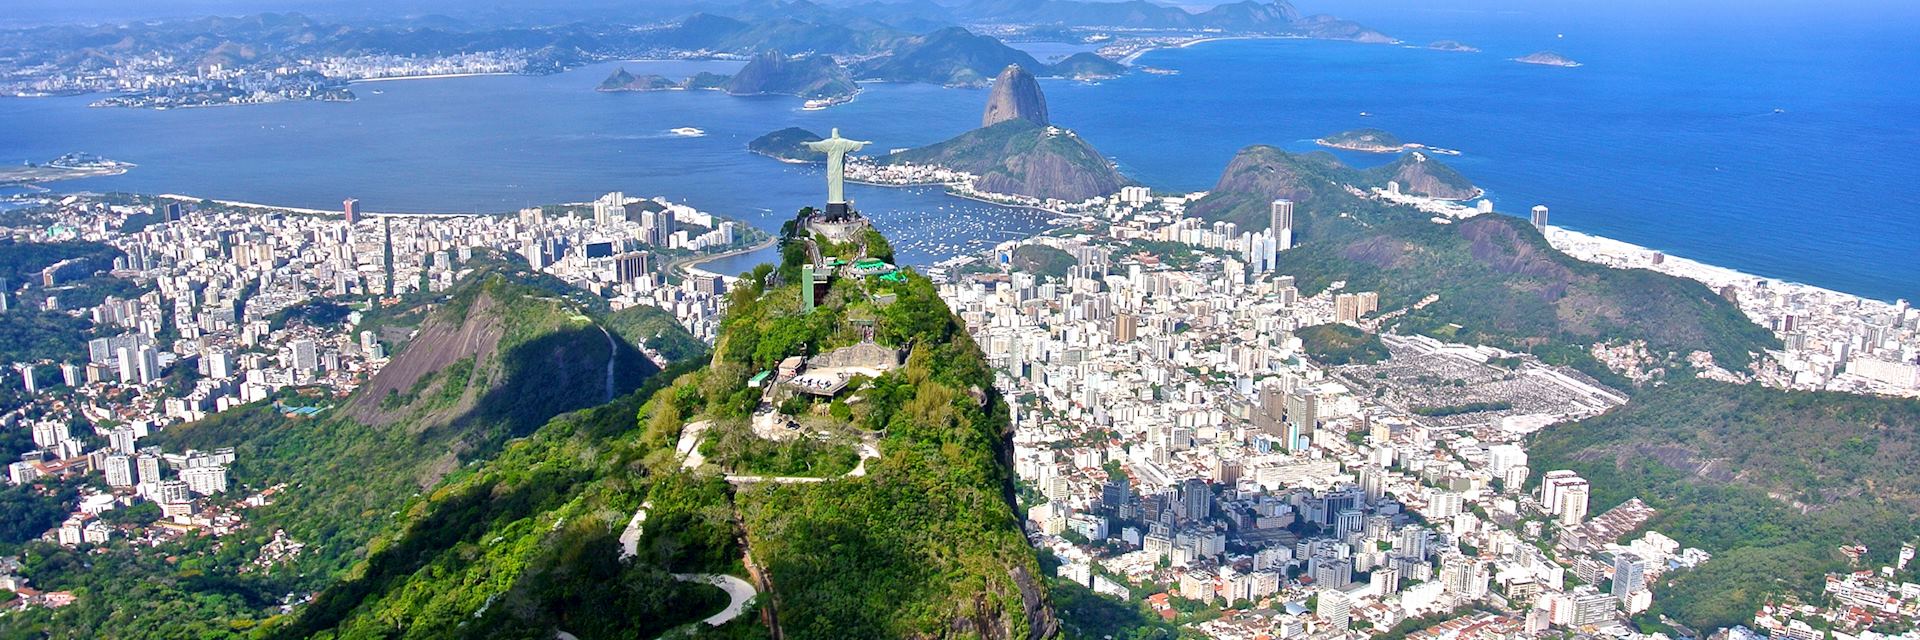 Belmond Brazil  Luxury Hotels in Rio and Iguassu